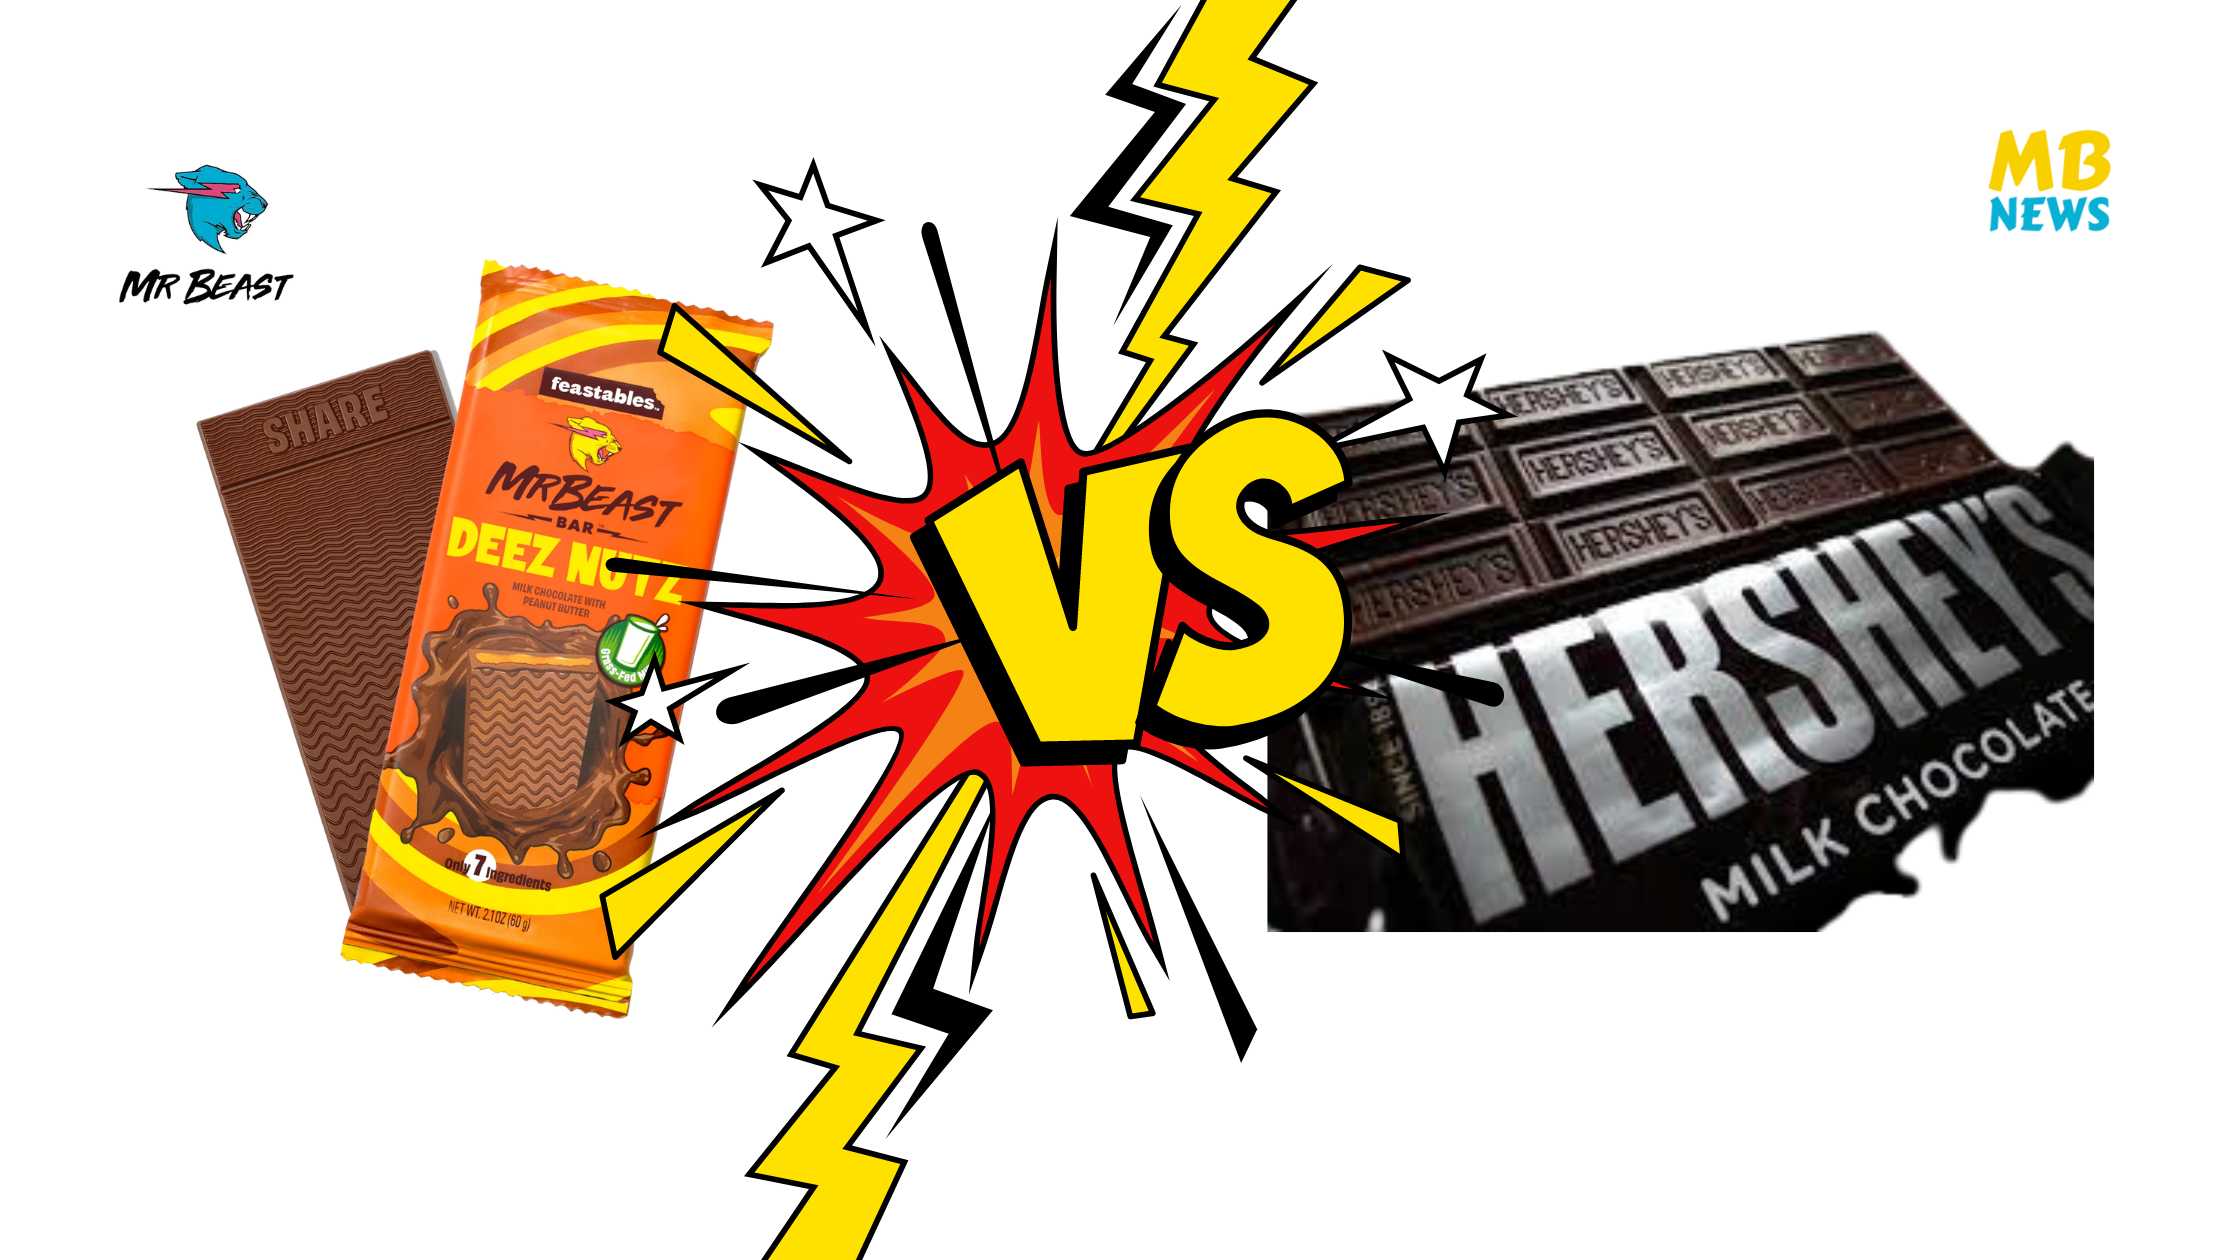 Feastables vs. Hershey's: A Chocolate Showdown